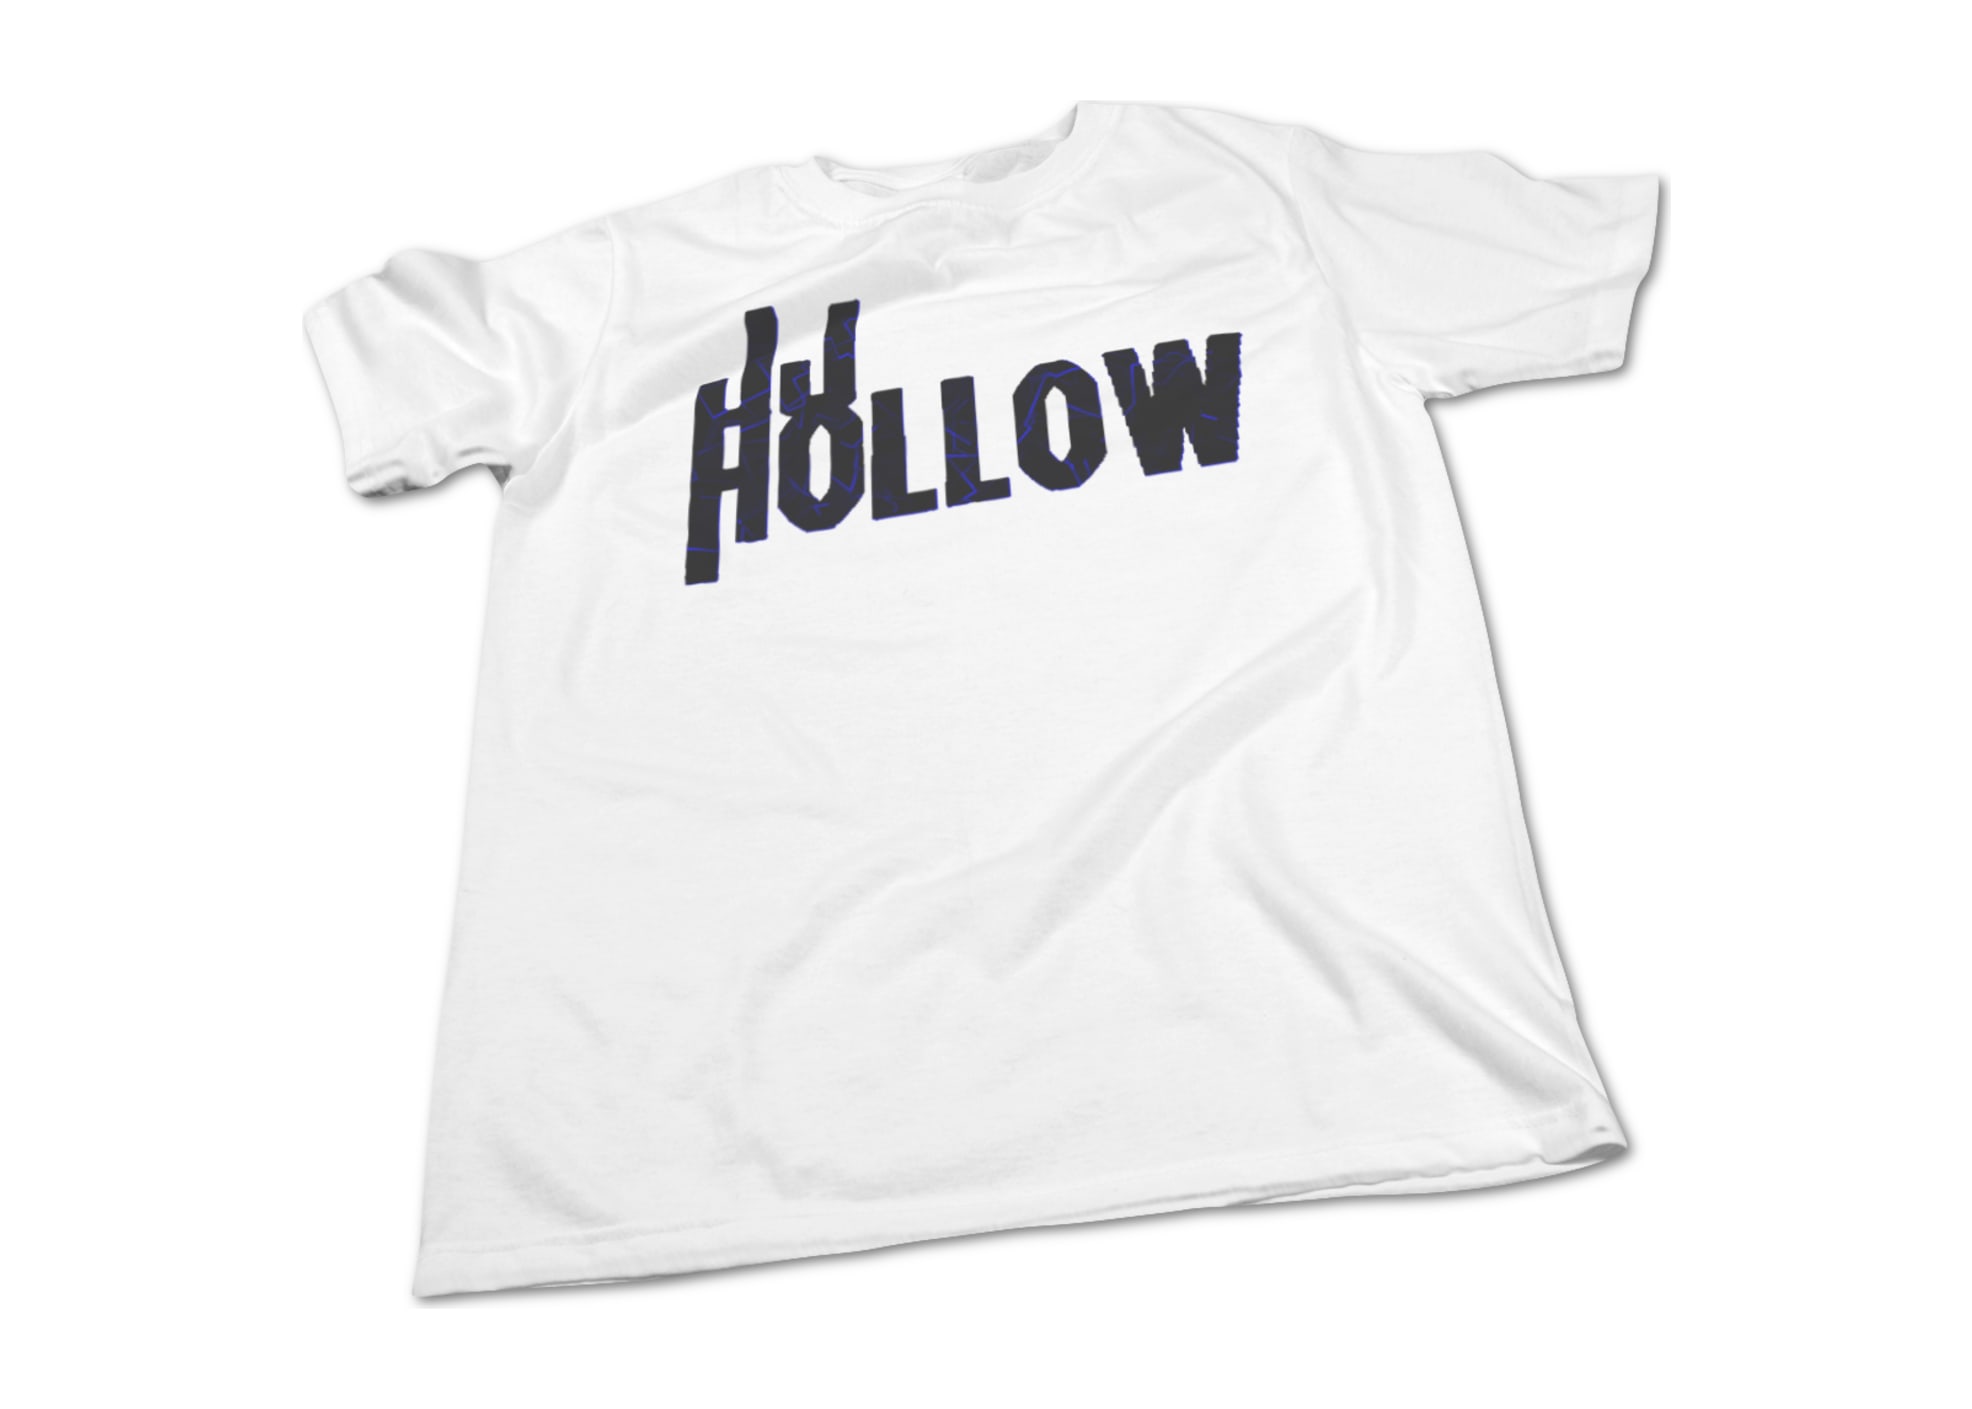 Jj hollow hollow  white  1595803986